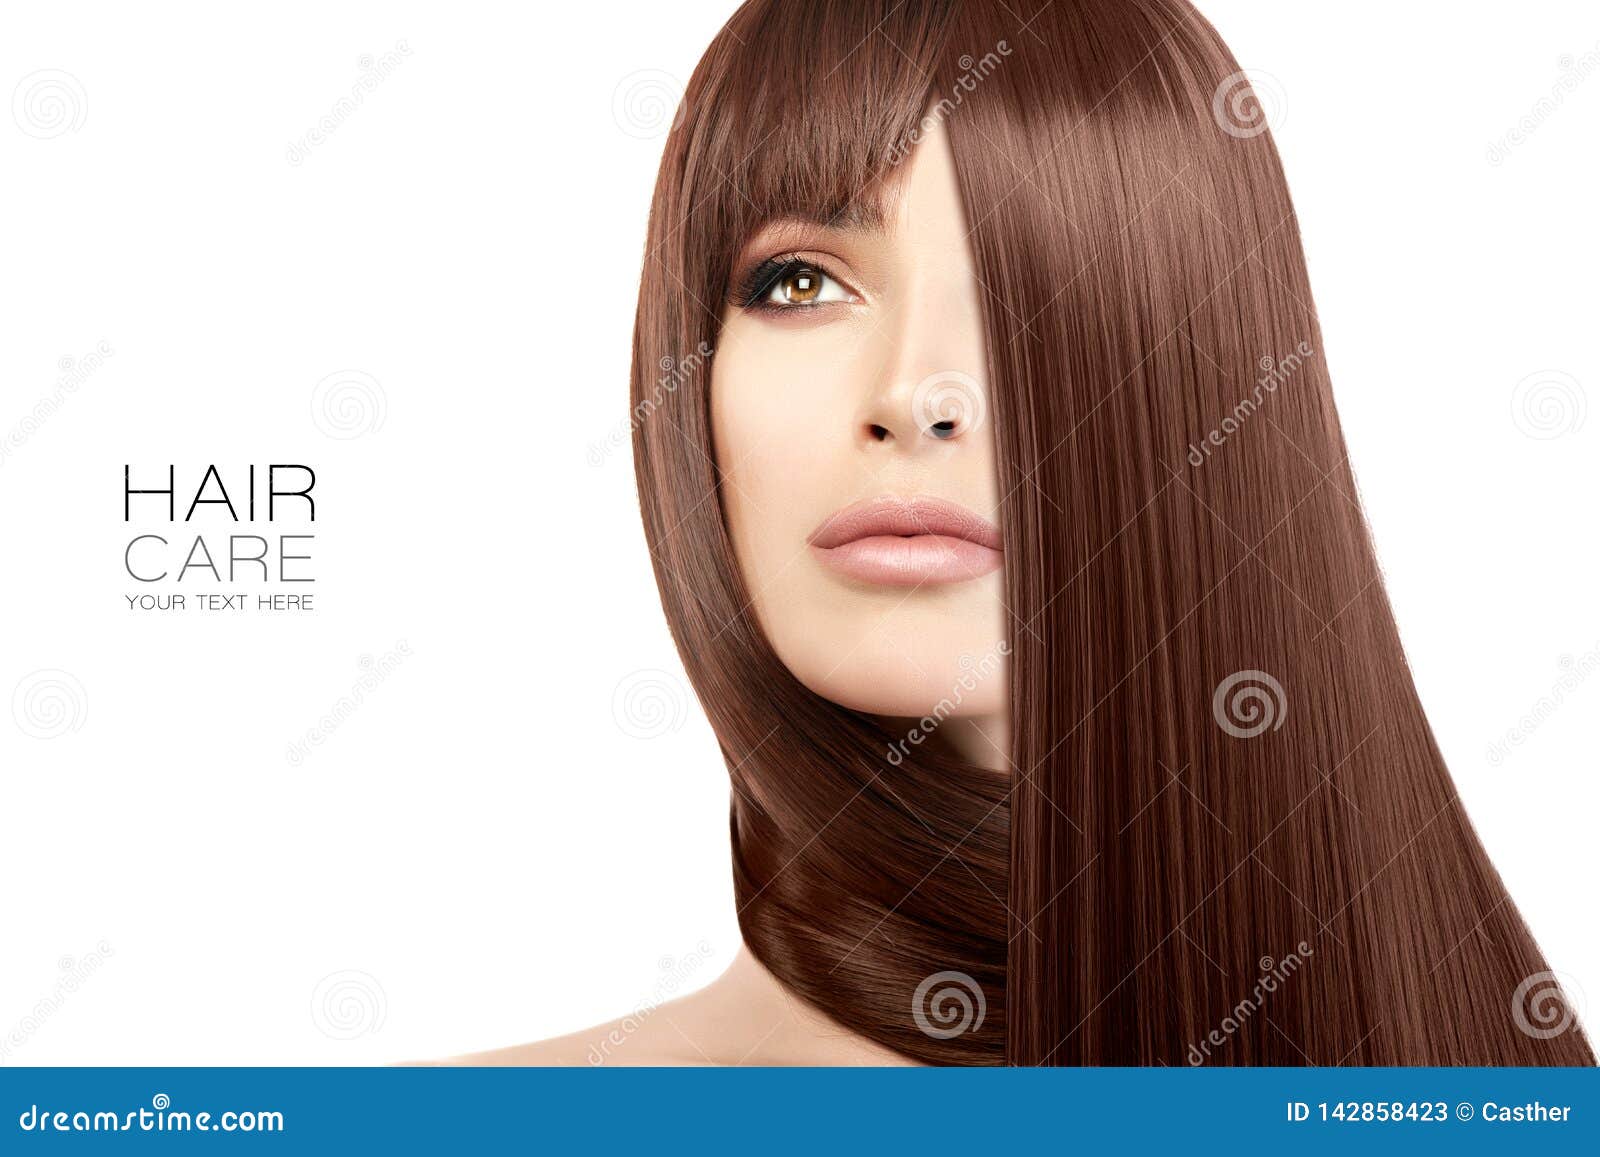 Hair Salon Concept Beauty Model Girl With Healthy Straight